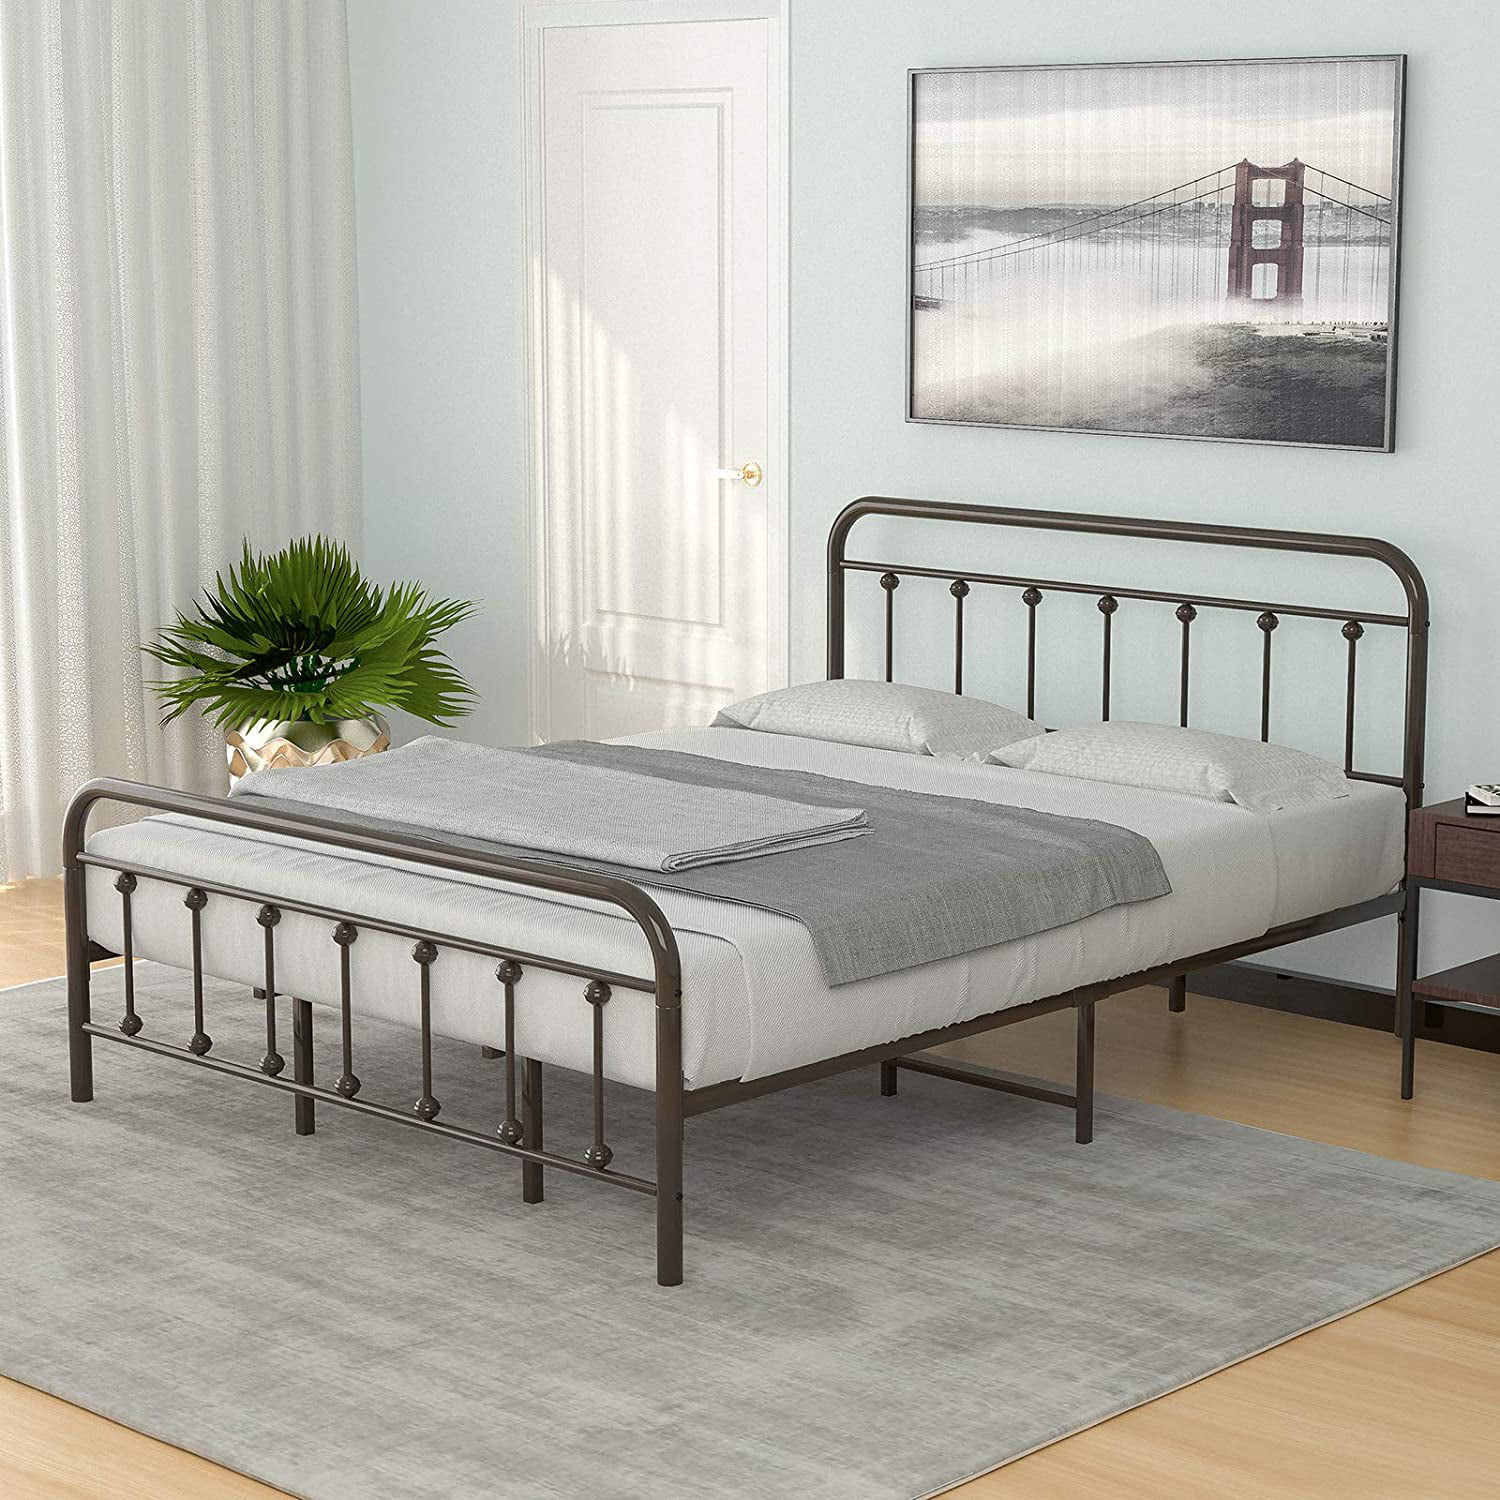 Mecor King Size Metal Platform Bed, King Size Iron Bed